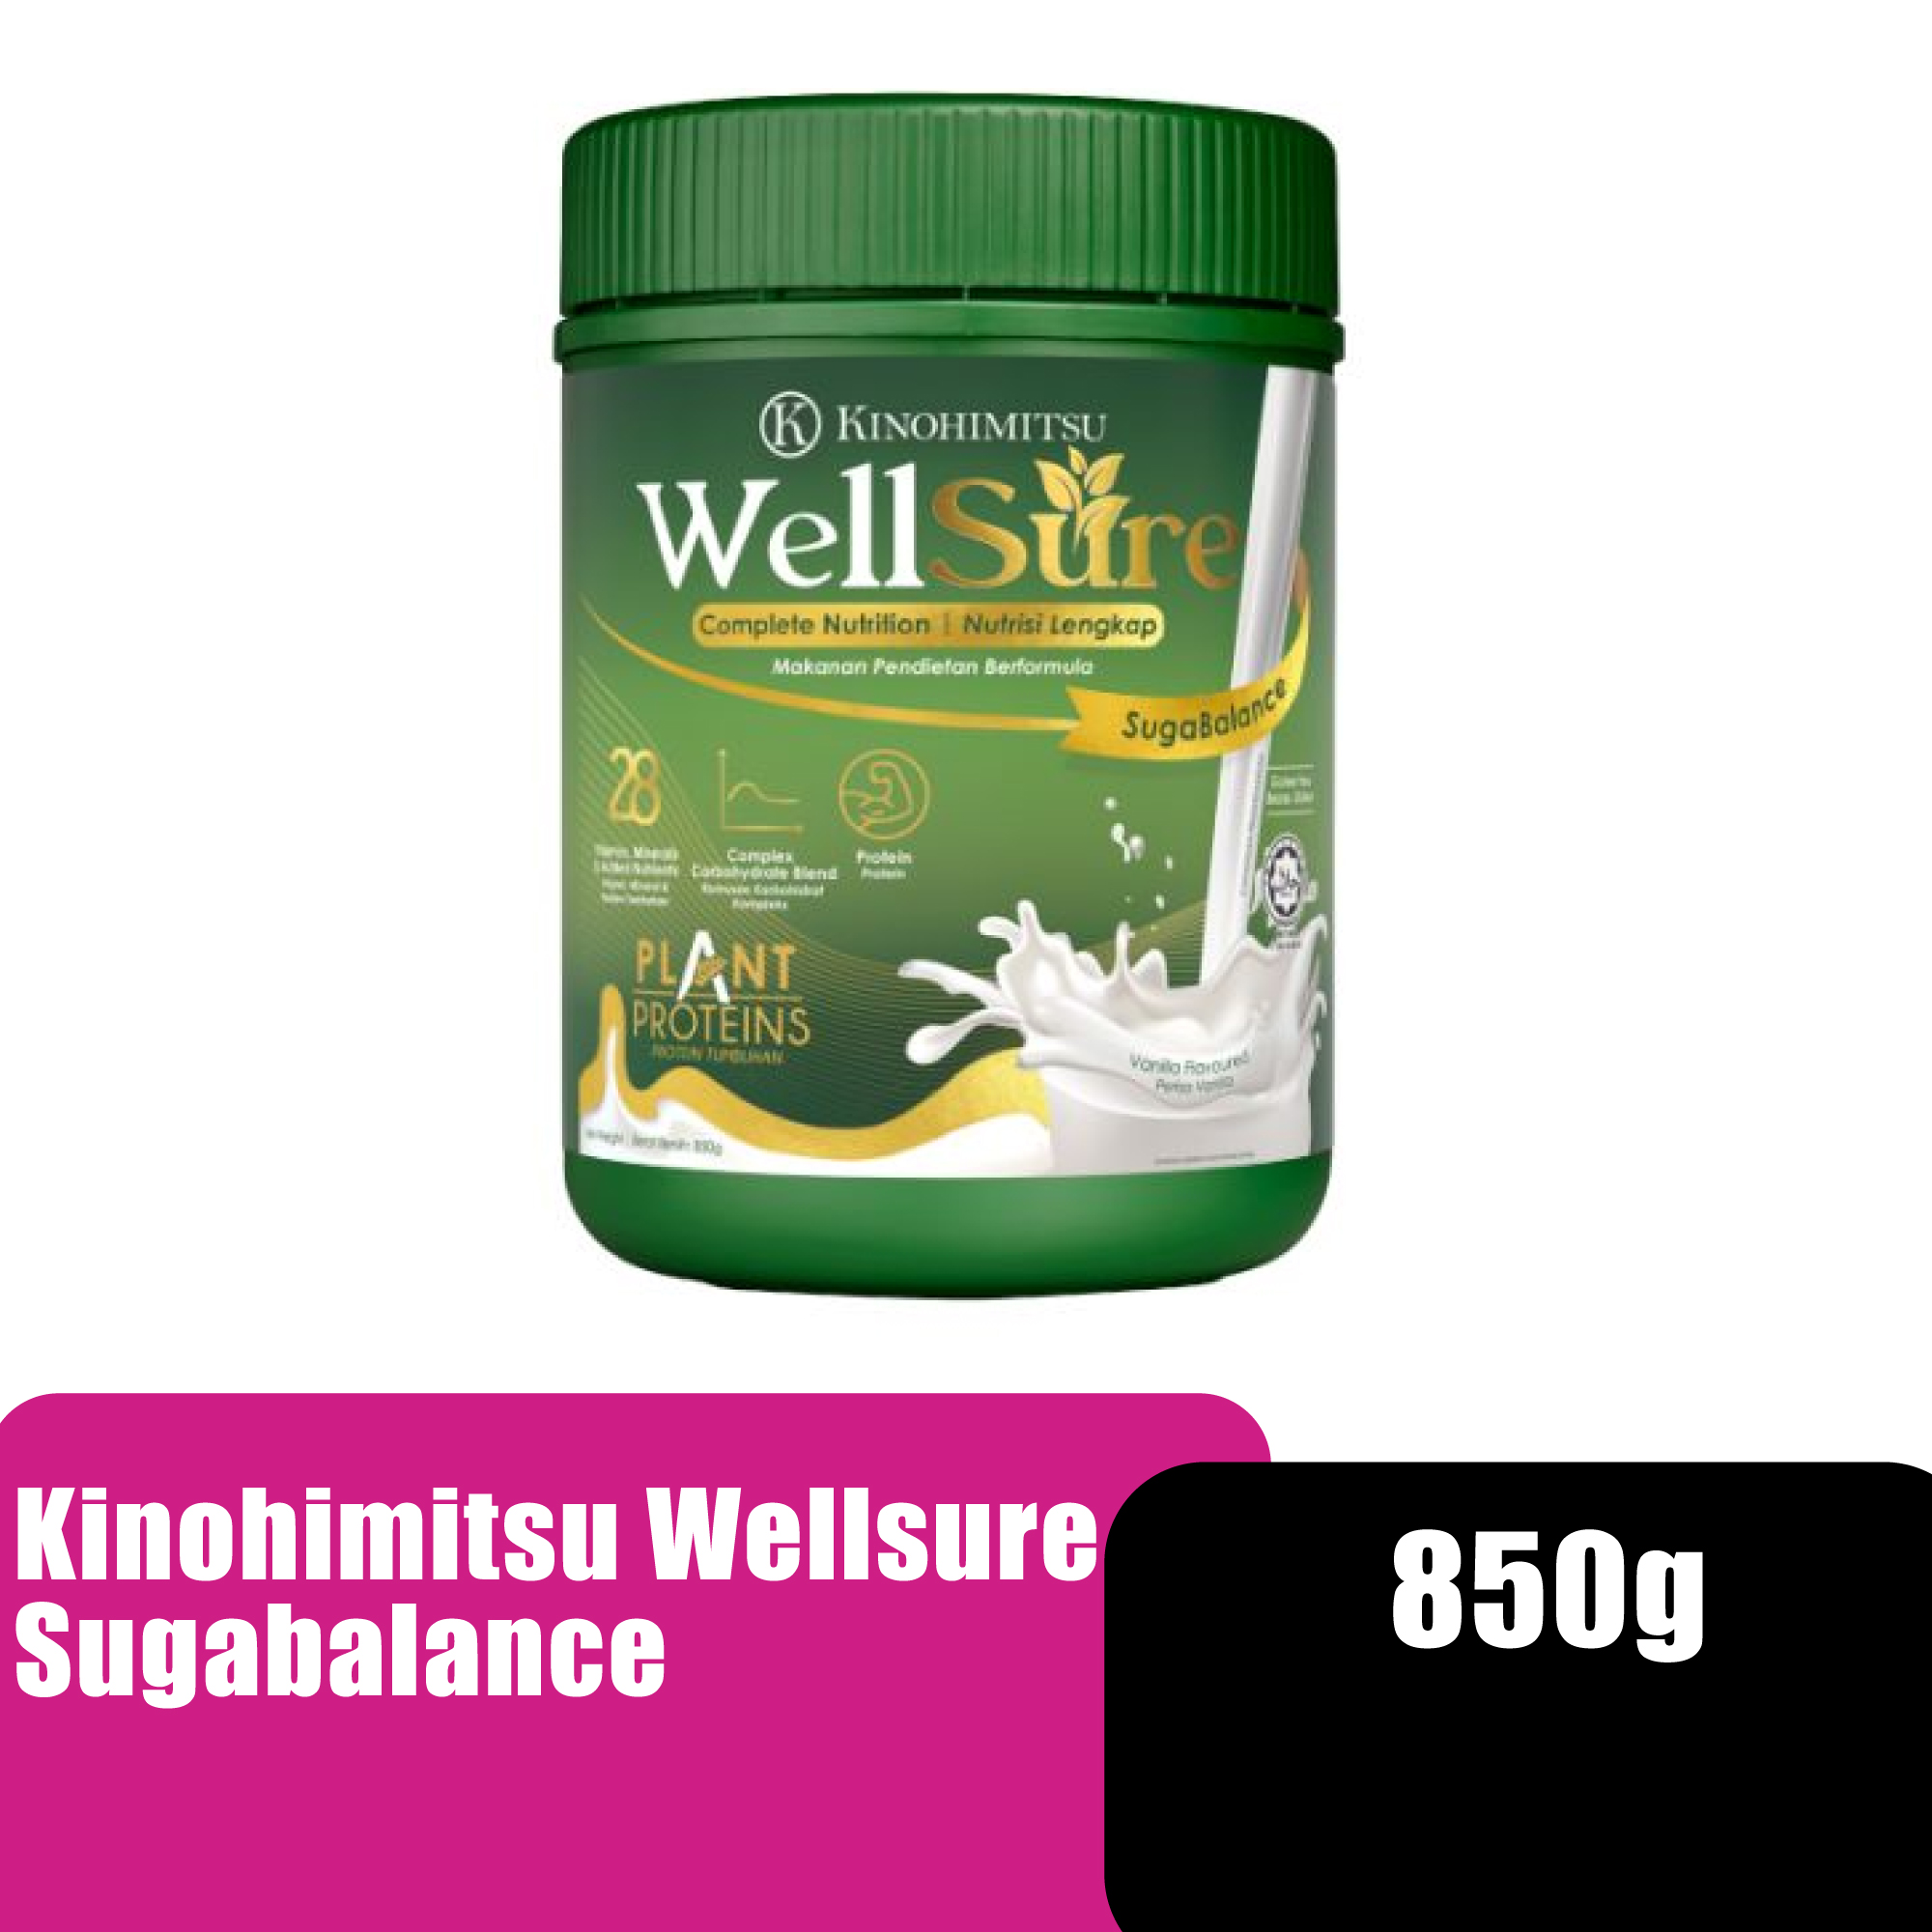 KINOHIMITSU Wellsure Sugabalance (850g) Diabetes Supplement, Blood Sugar Control, Kencing Manis Supplement 糖尿病